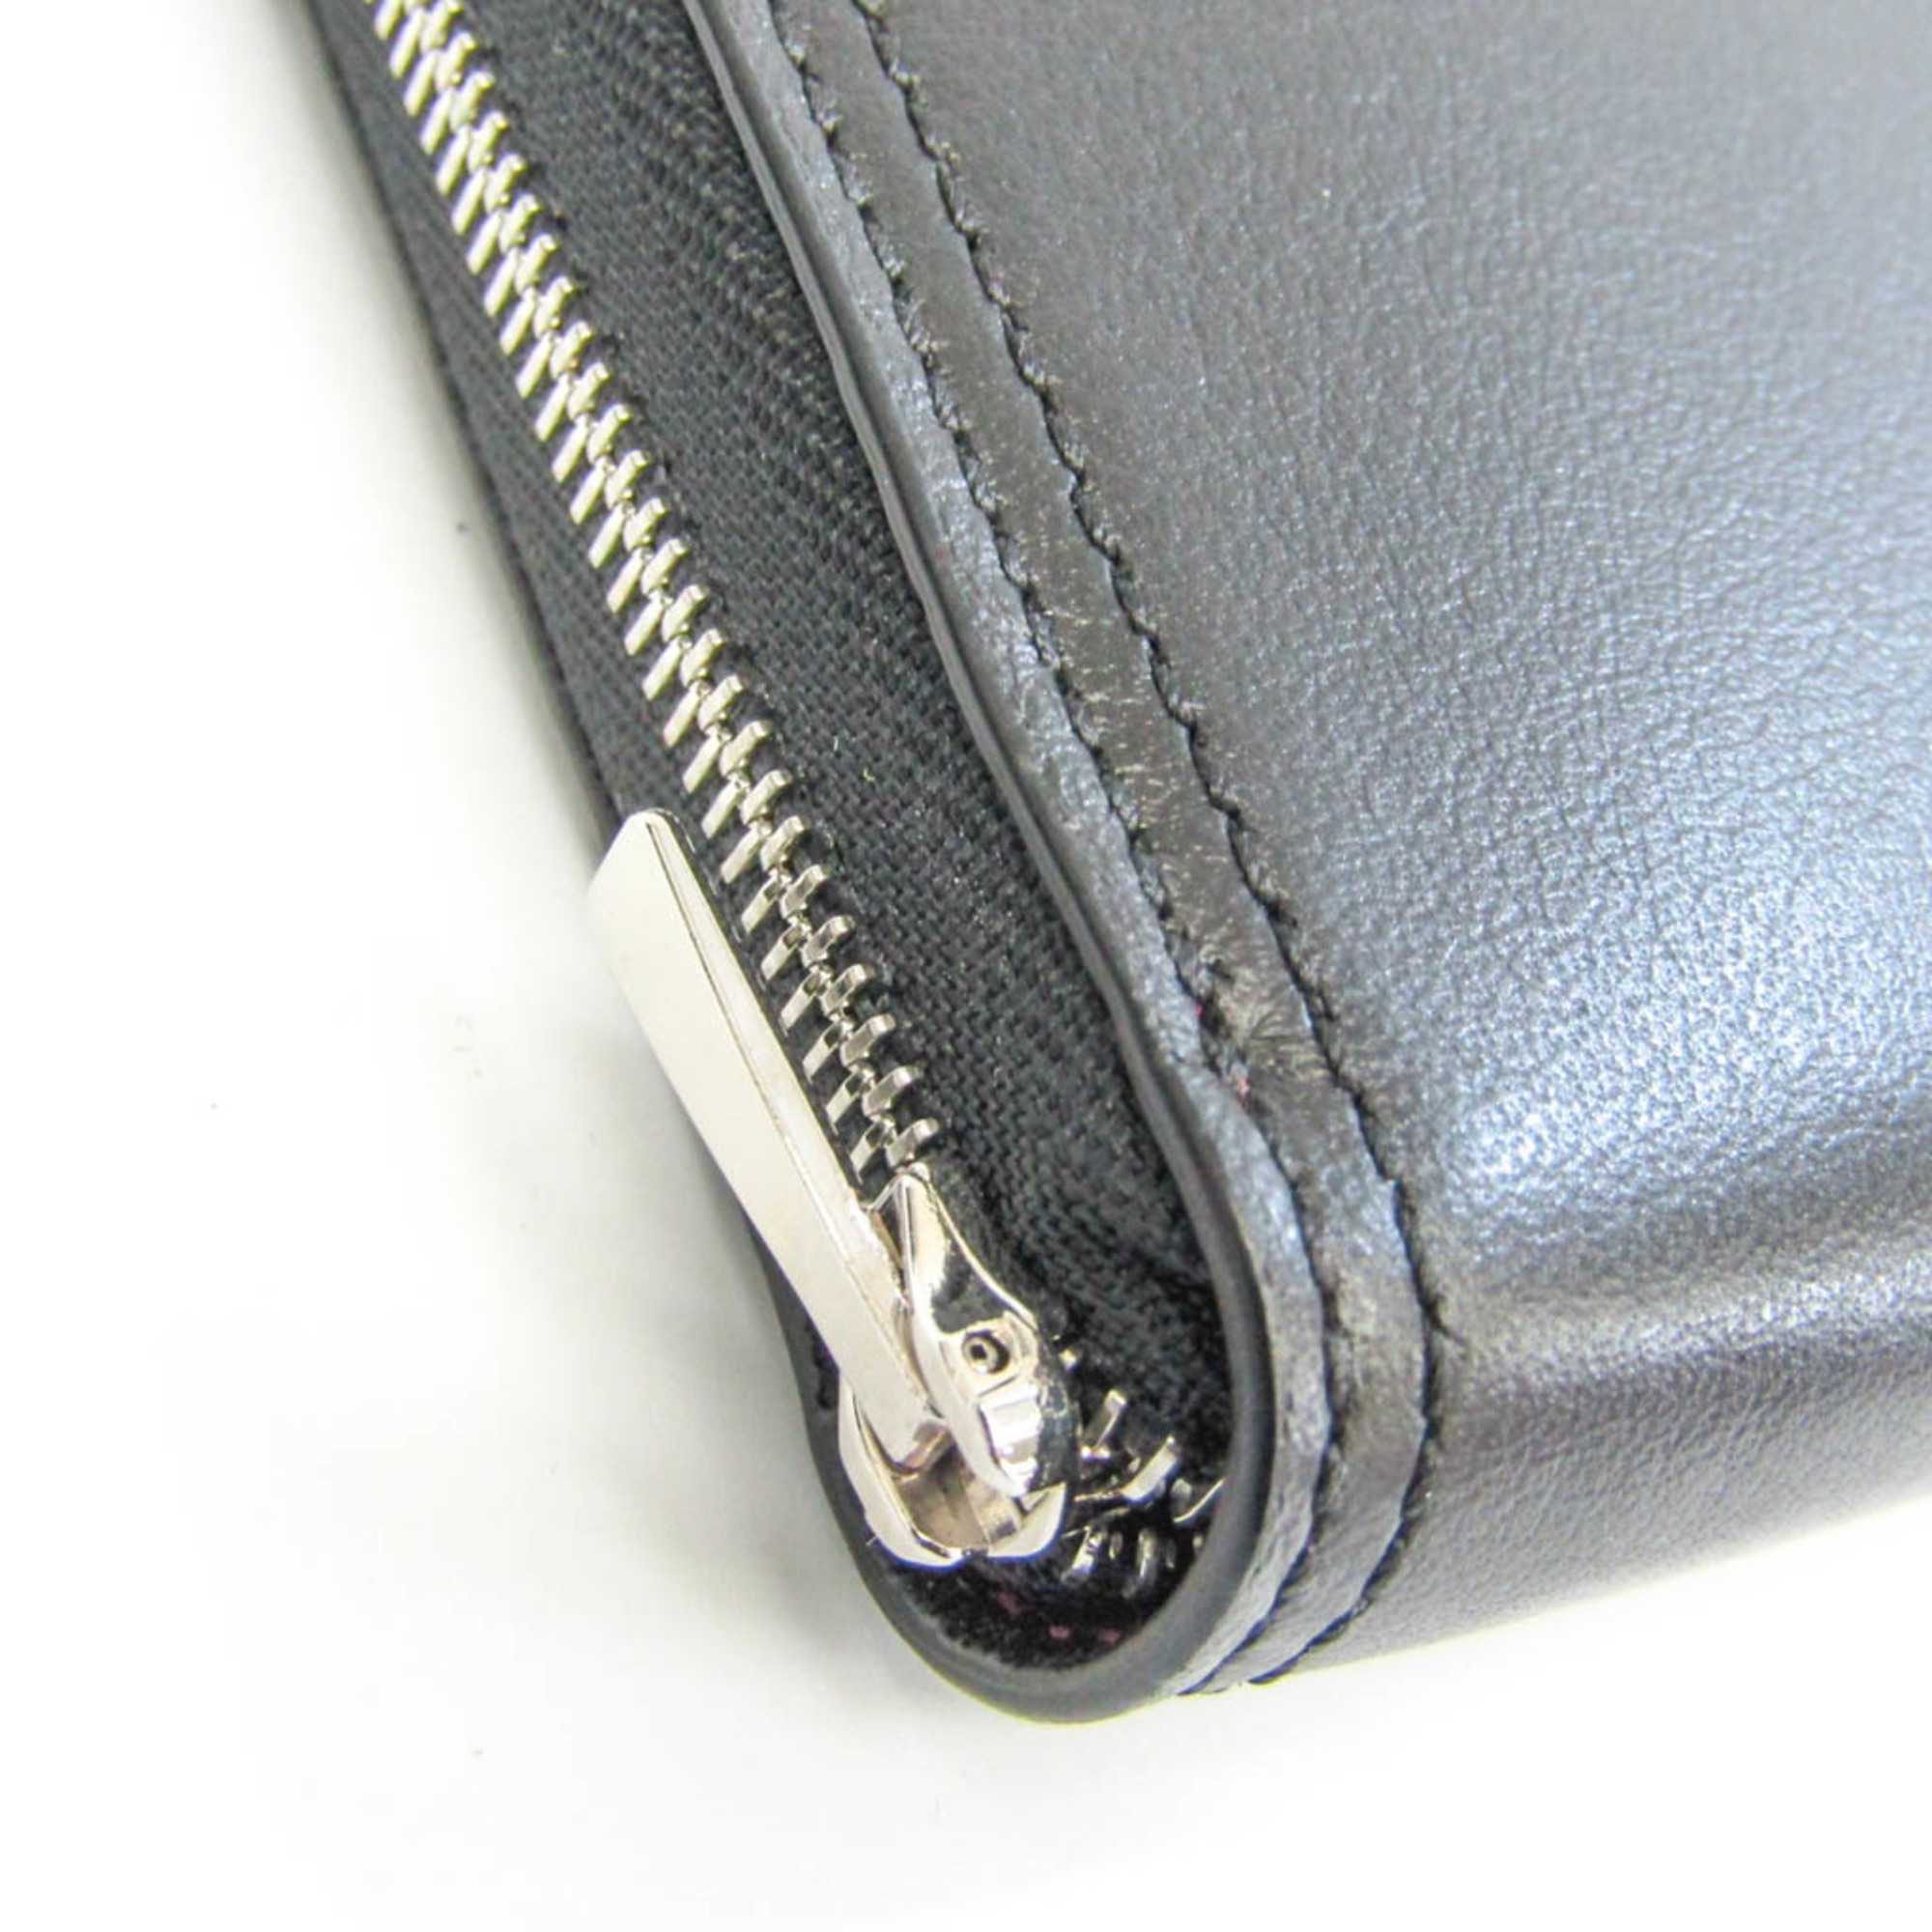 J&M Davidson SMALL ZIP AROUND PURSE 10264N Women's Leather Coin Purse/coin Case Black,Bordeaux